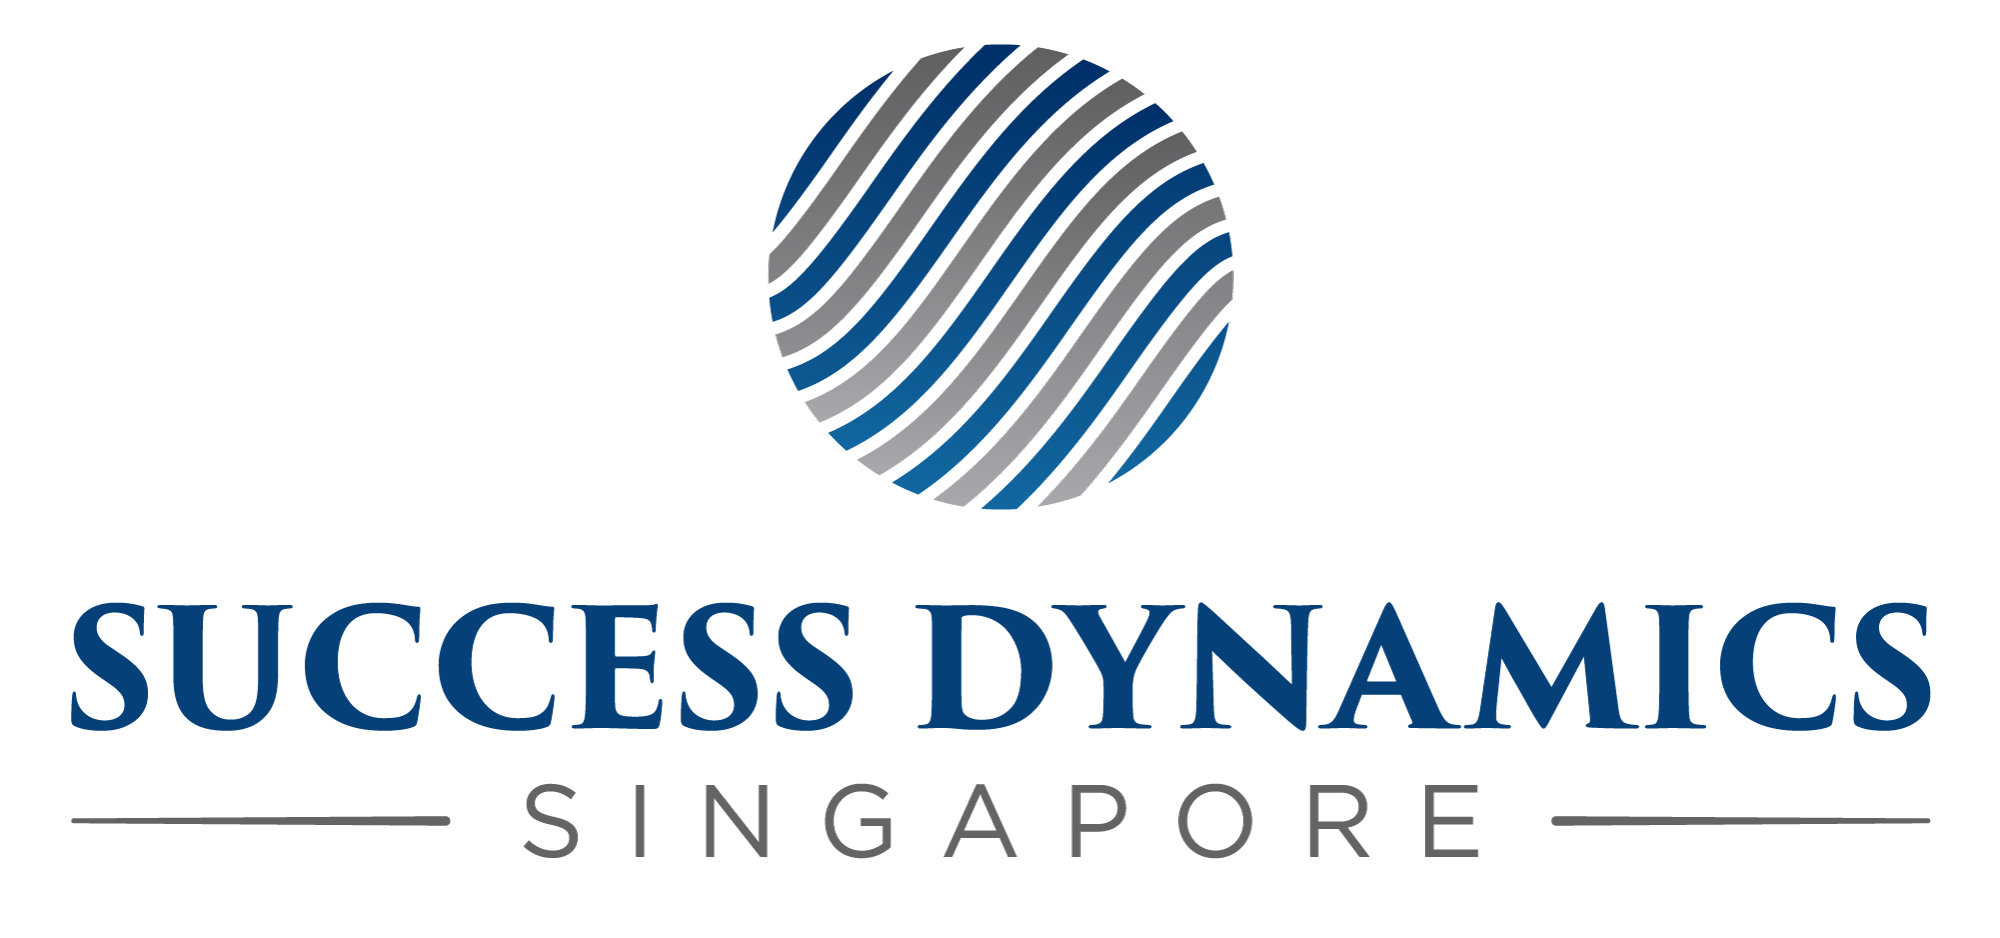 Success Dynamics Alliance Singapore